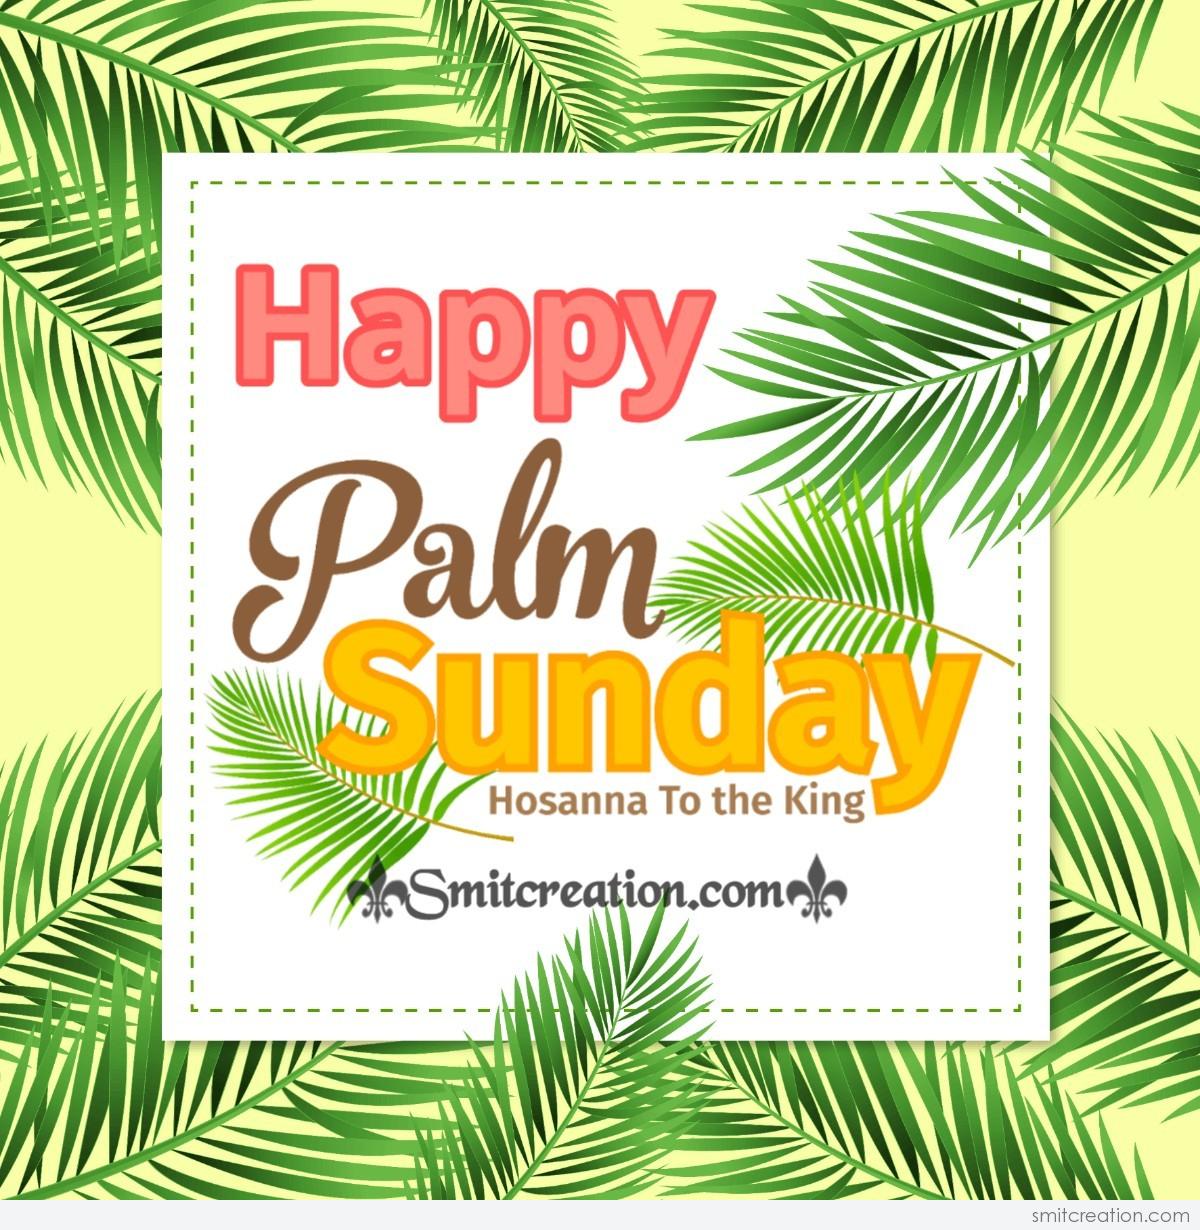 Happy Palm Sunday Pic - SmitCreation.com